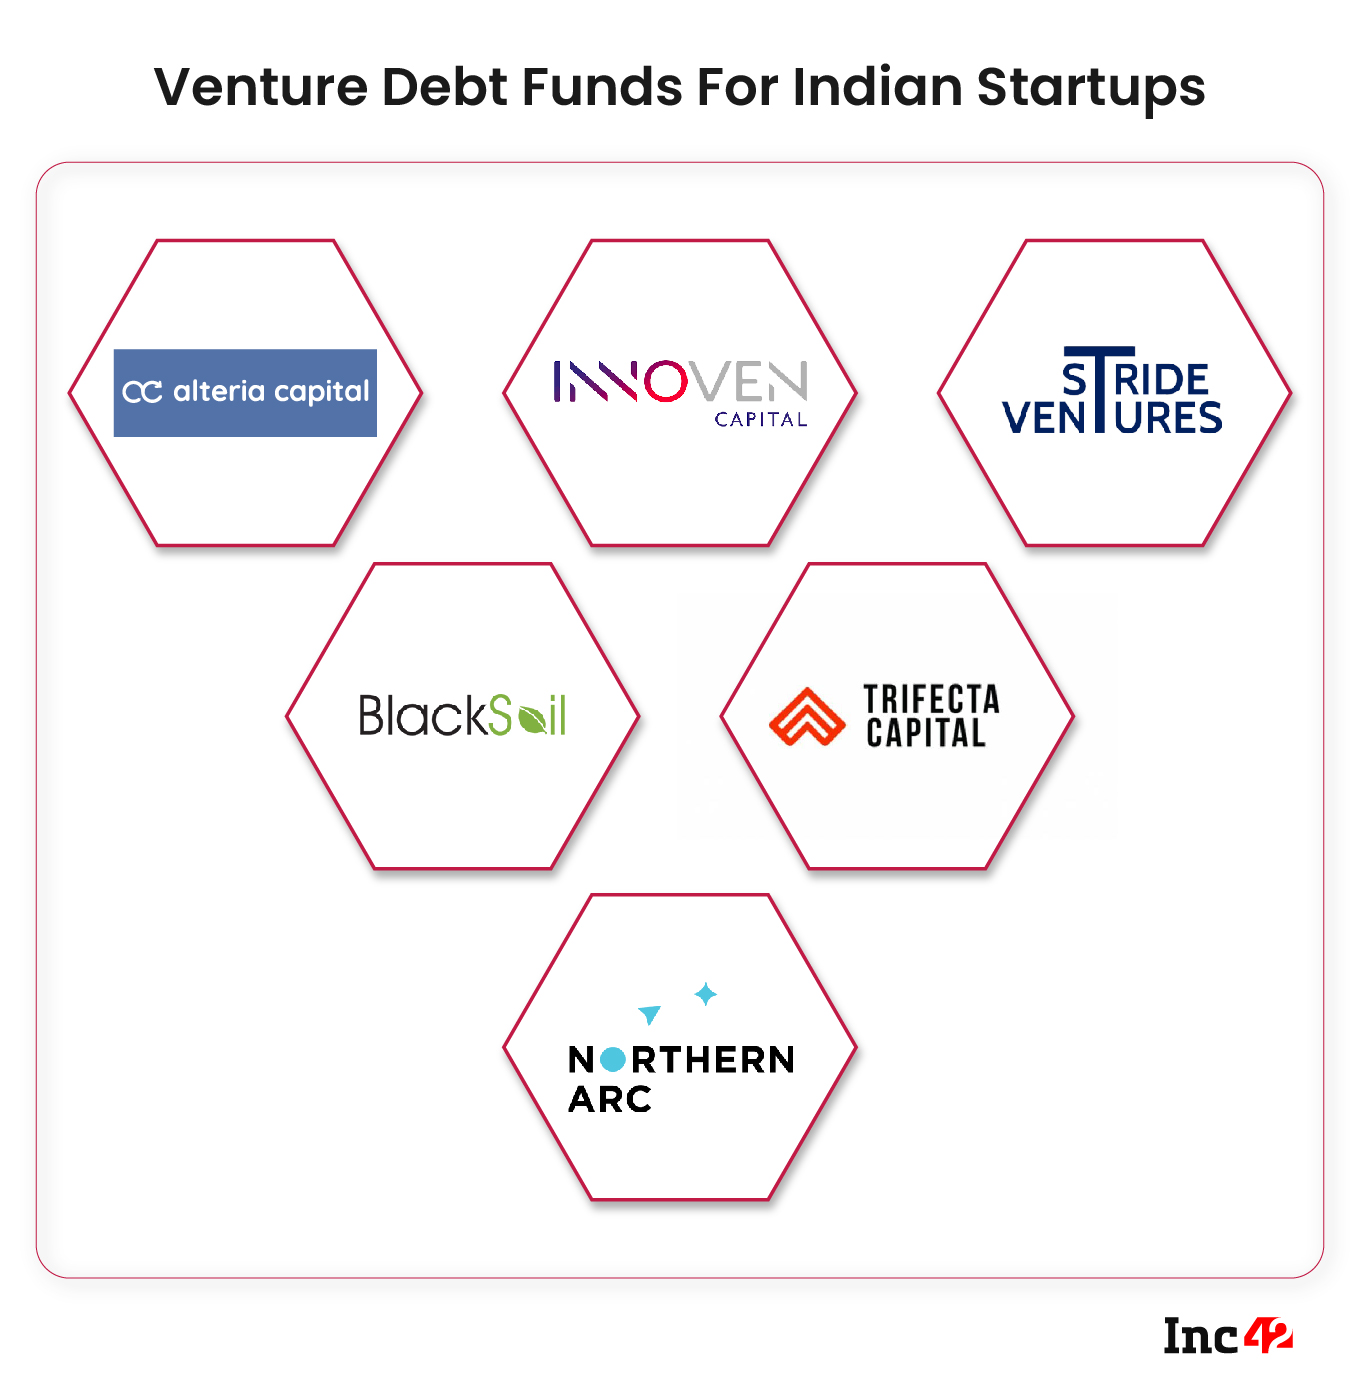 list of venture debt funds for Indian startups